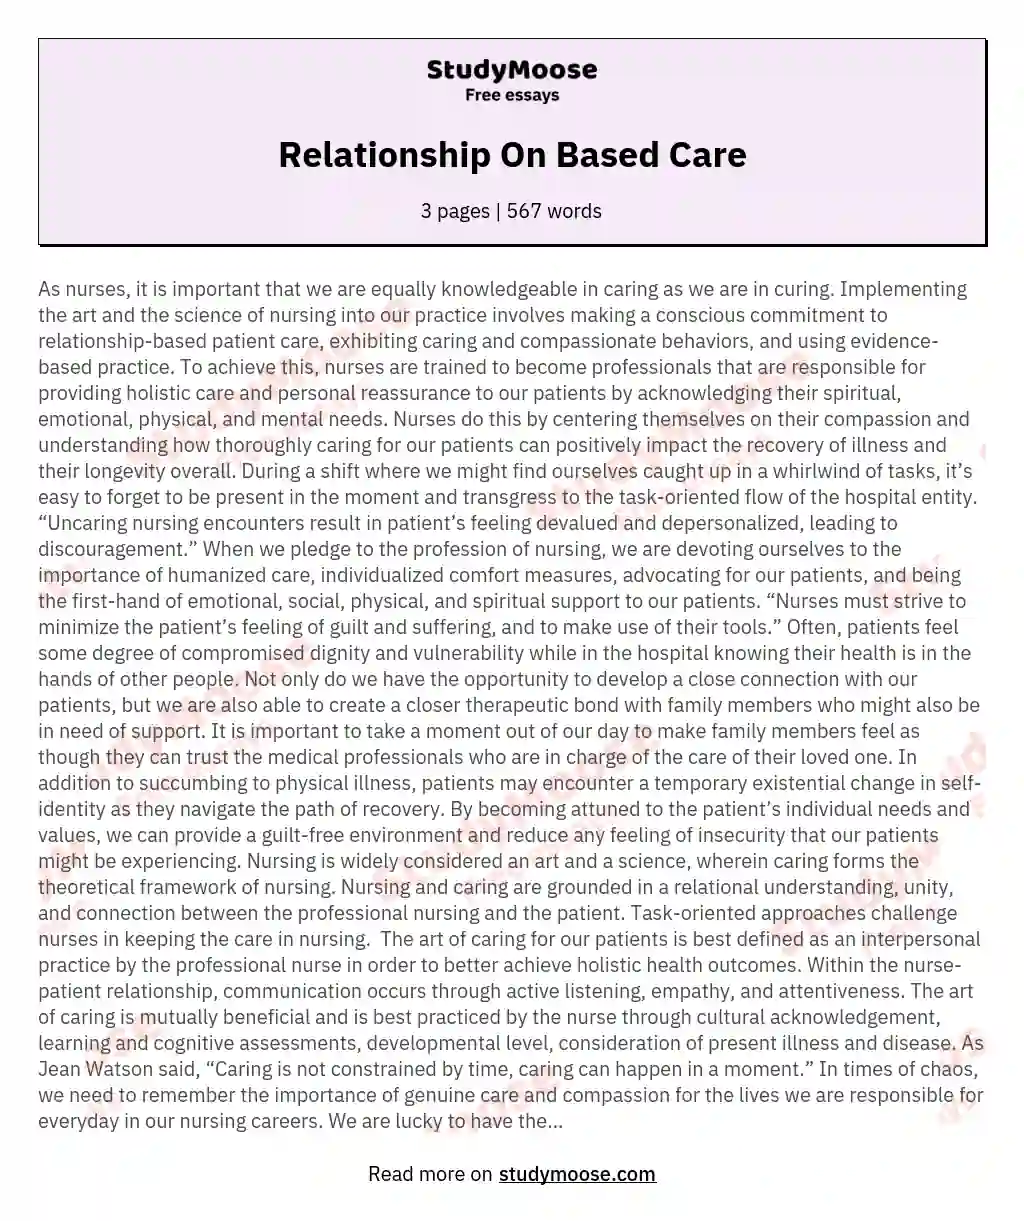 Relationship On Based Care essay